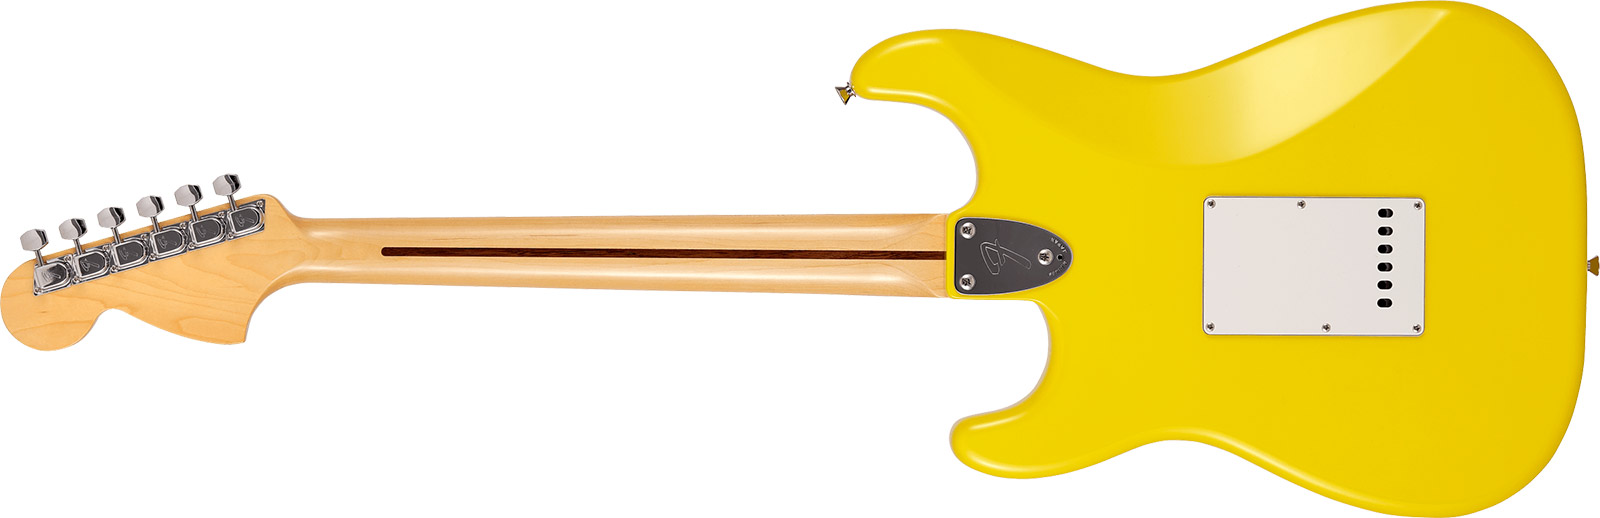 Fender Strat International Color Ltd Jap 3s Trem Mn - Monaco Yellow - E-Gitarre in Str-Form - Variation 1